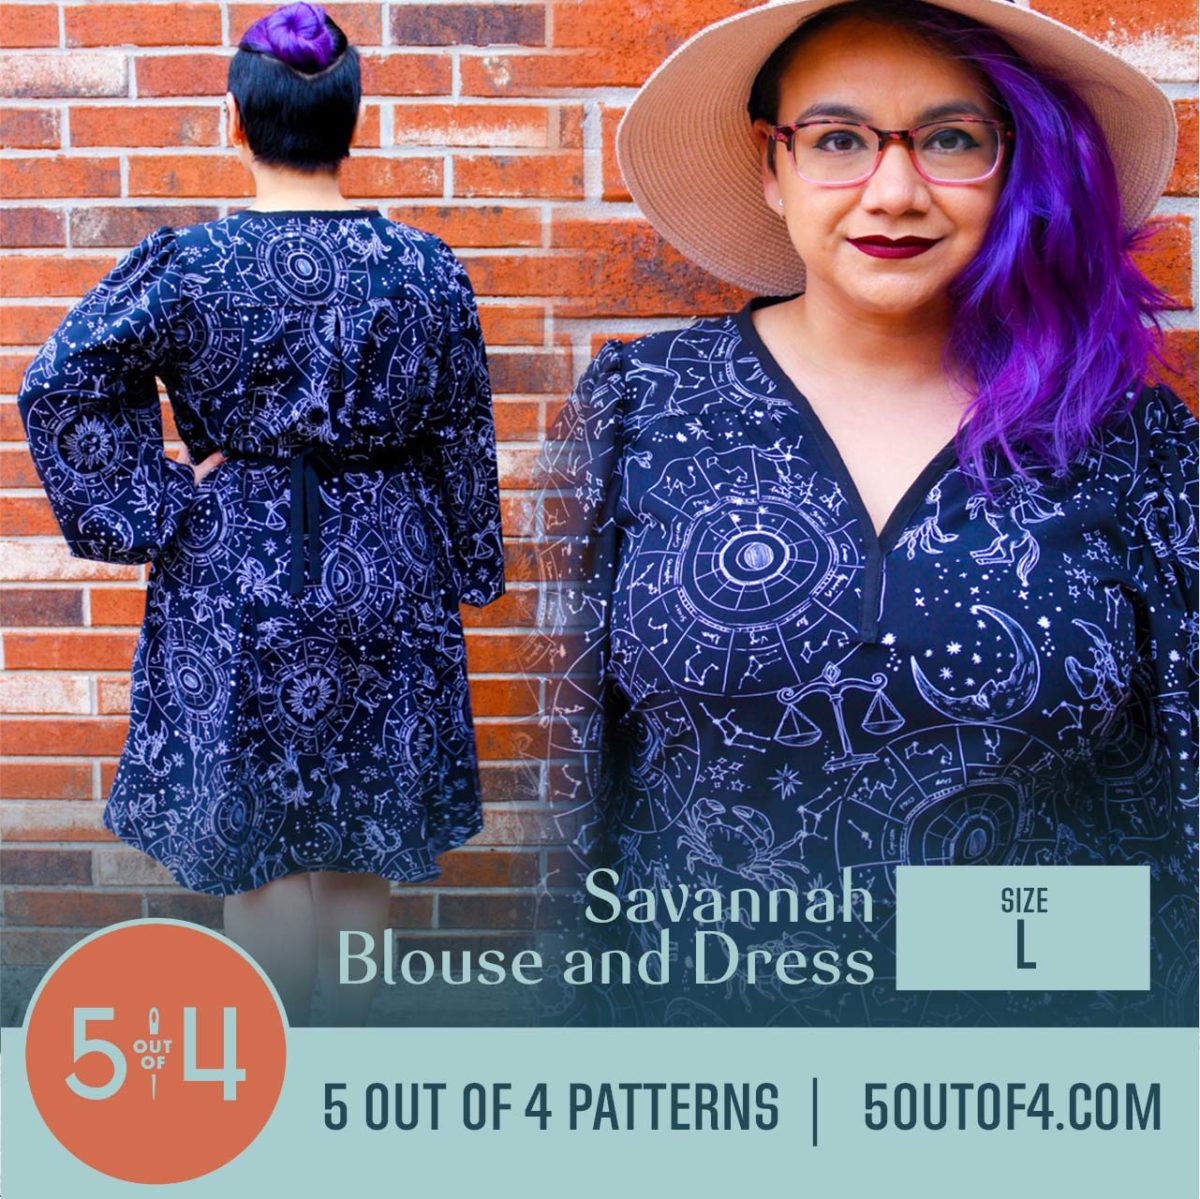 5oo4 Patterns Savannah blouse size L